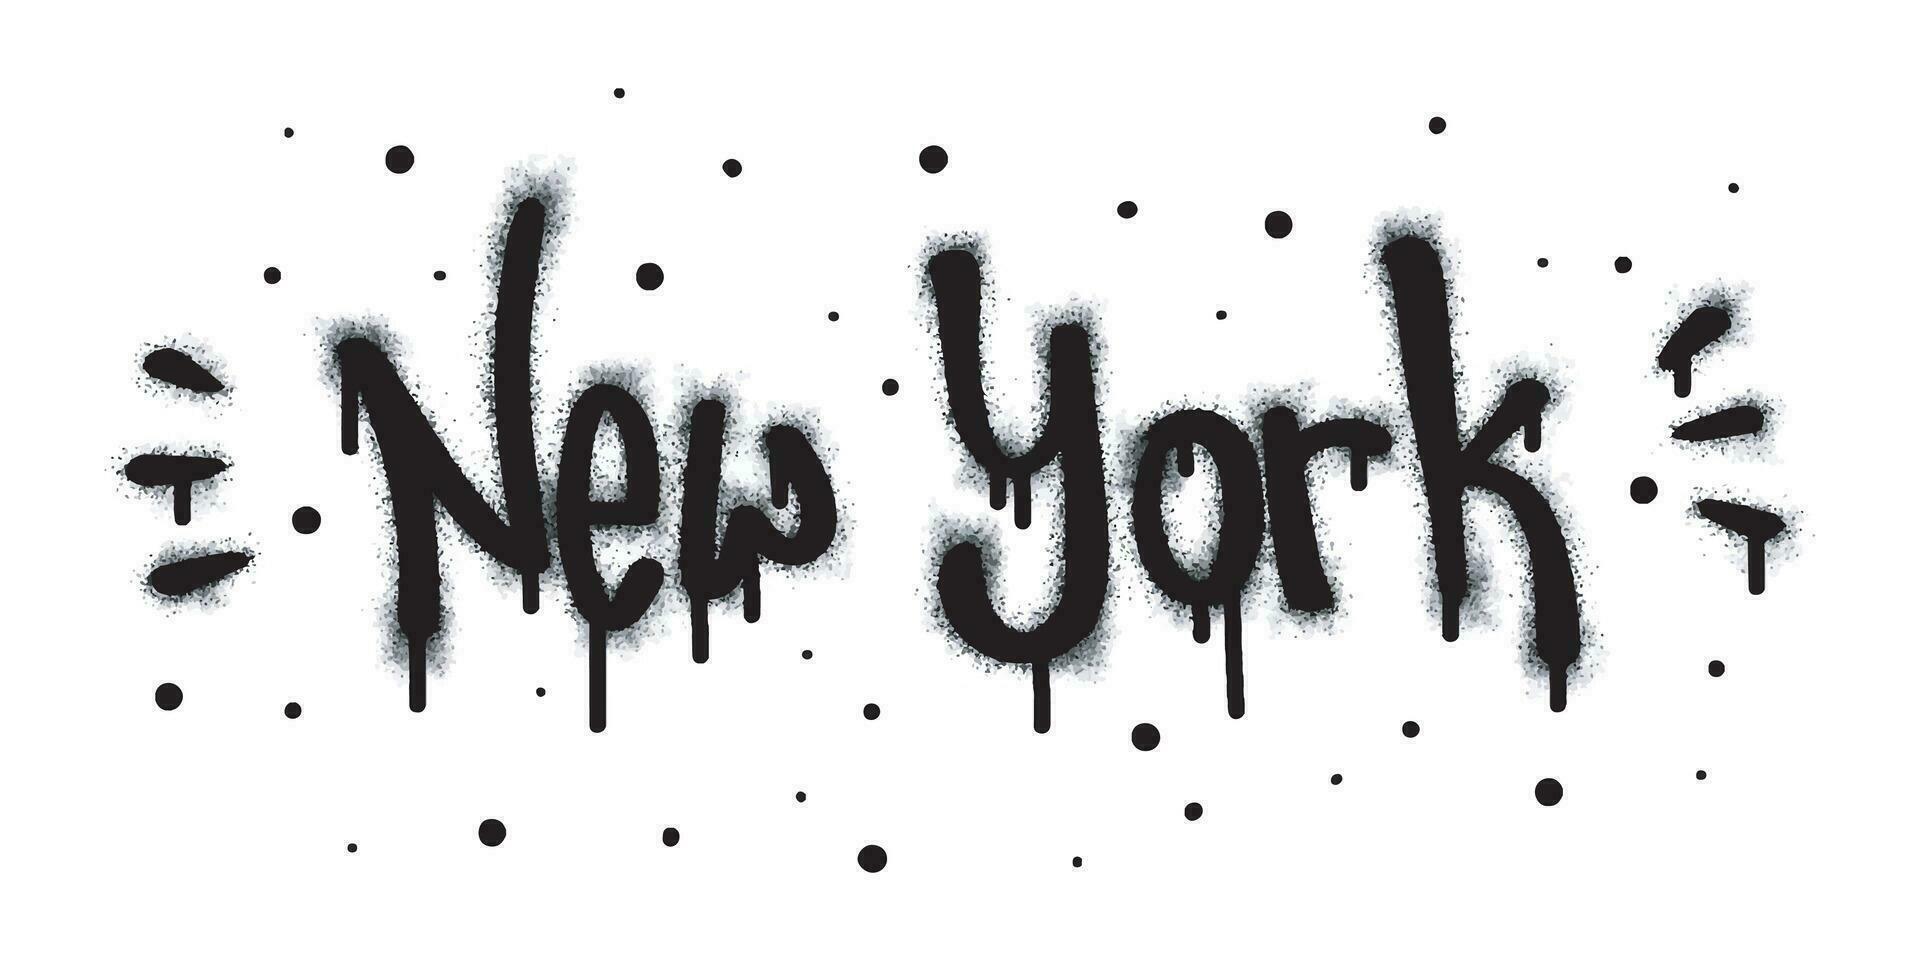 graffiti new york words and symbols sprayed in black vector